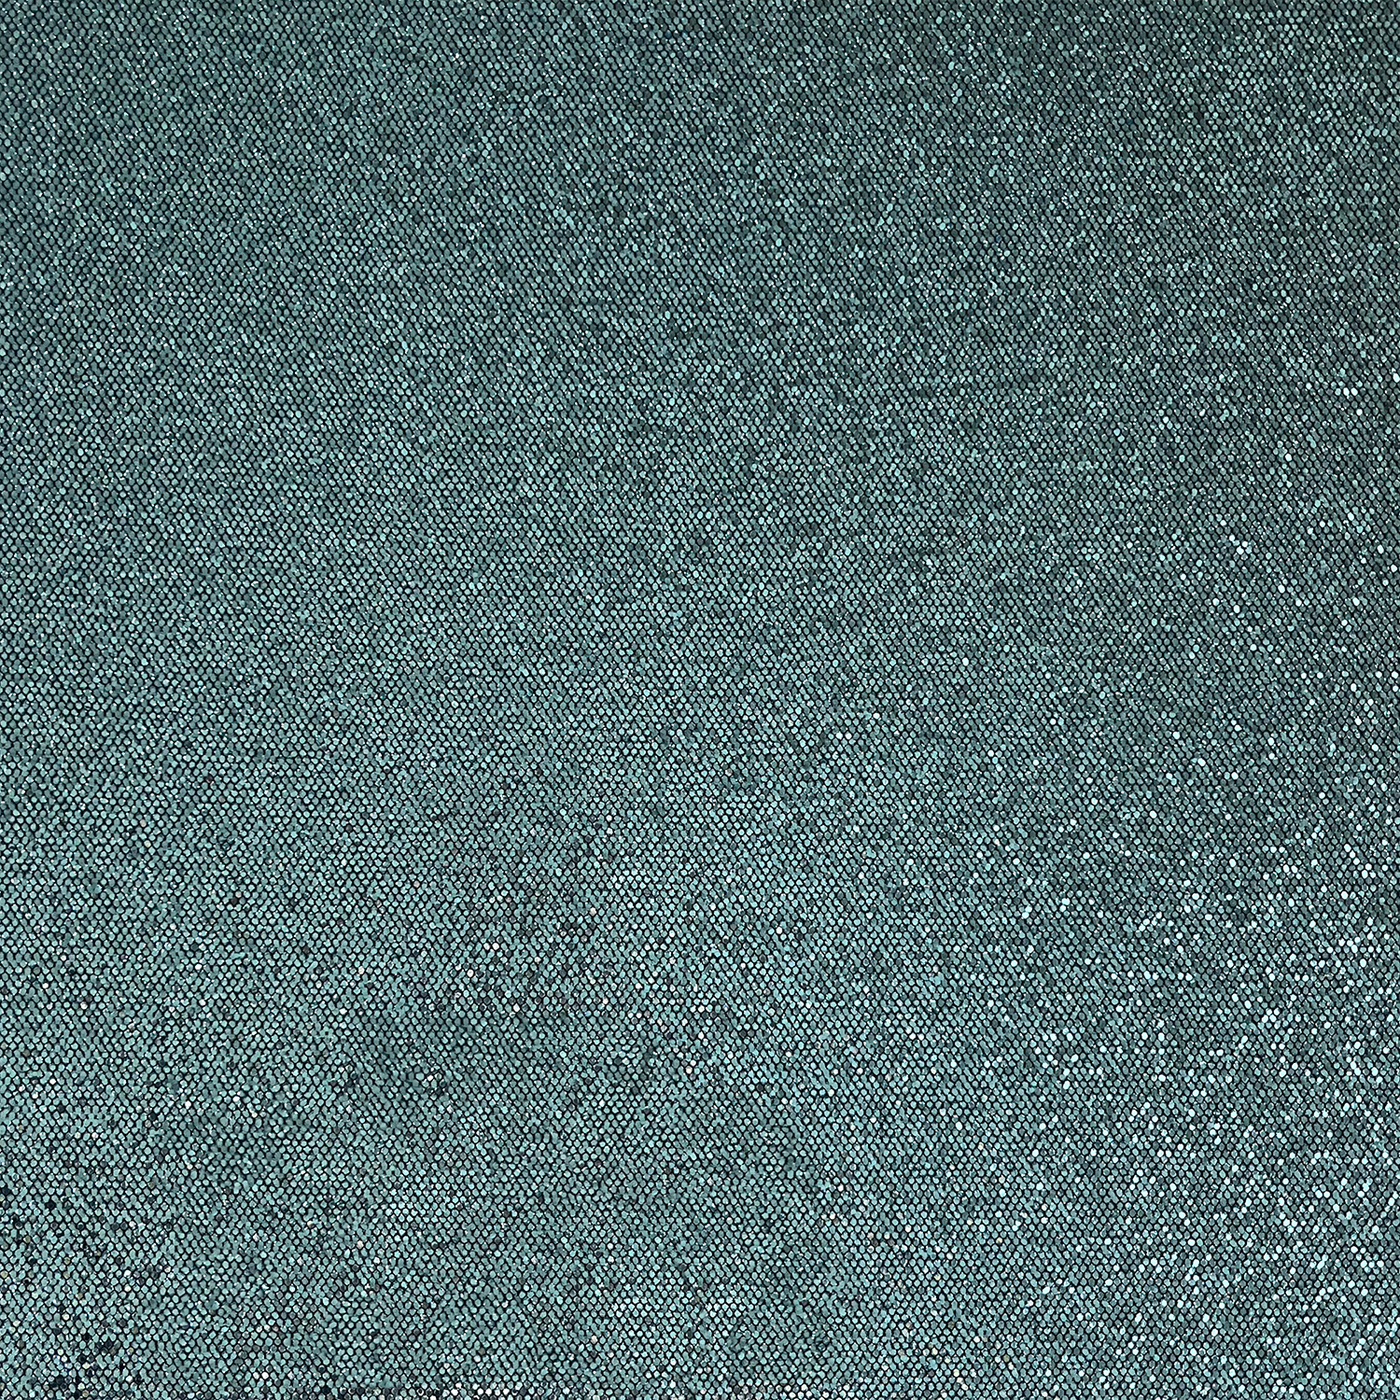 CALYPSO BLUE Sequin Glitter Cardstock - Teal disco ball glitter 